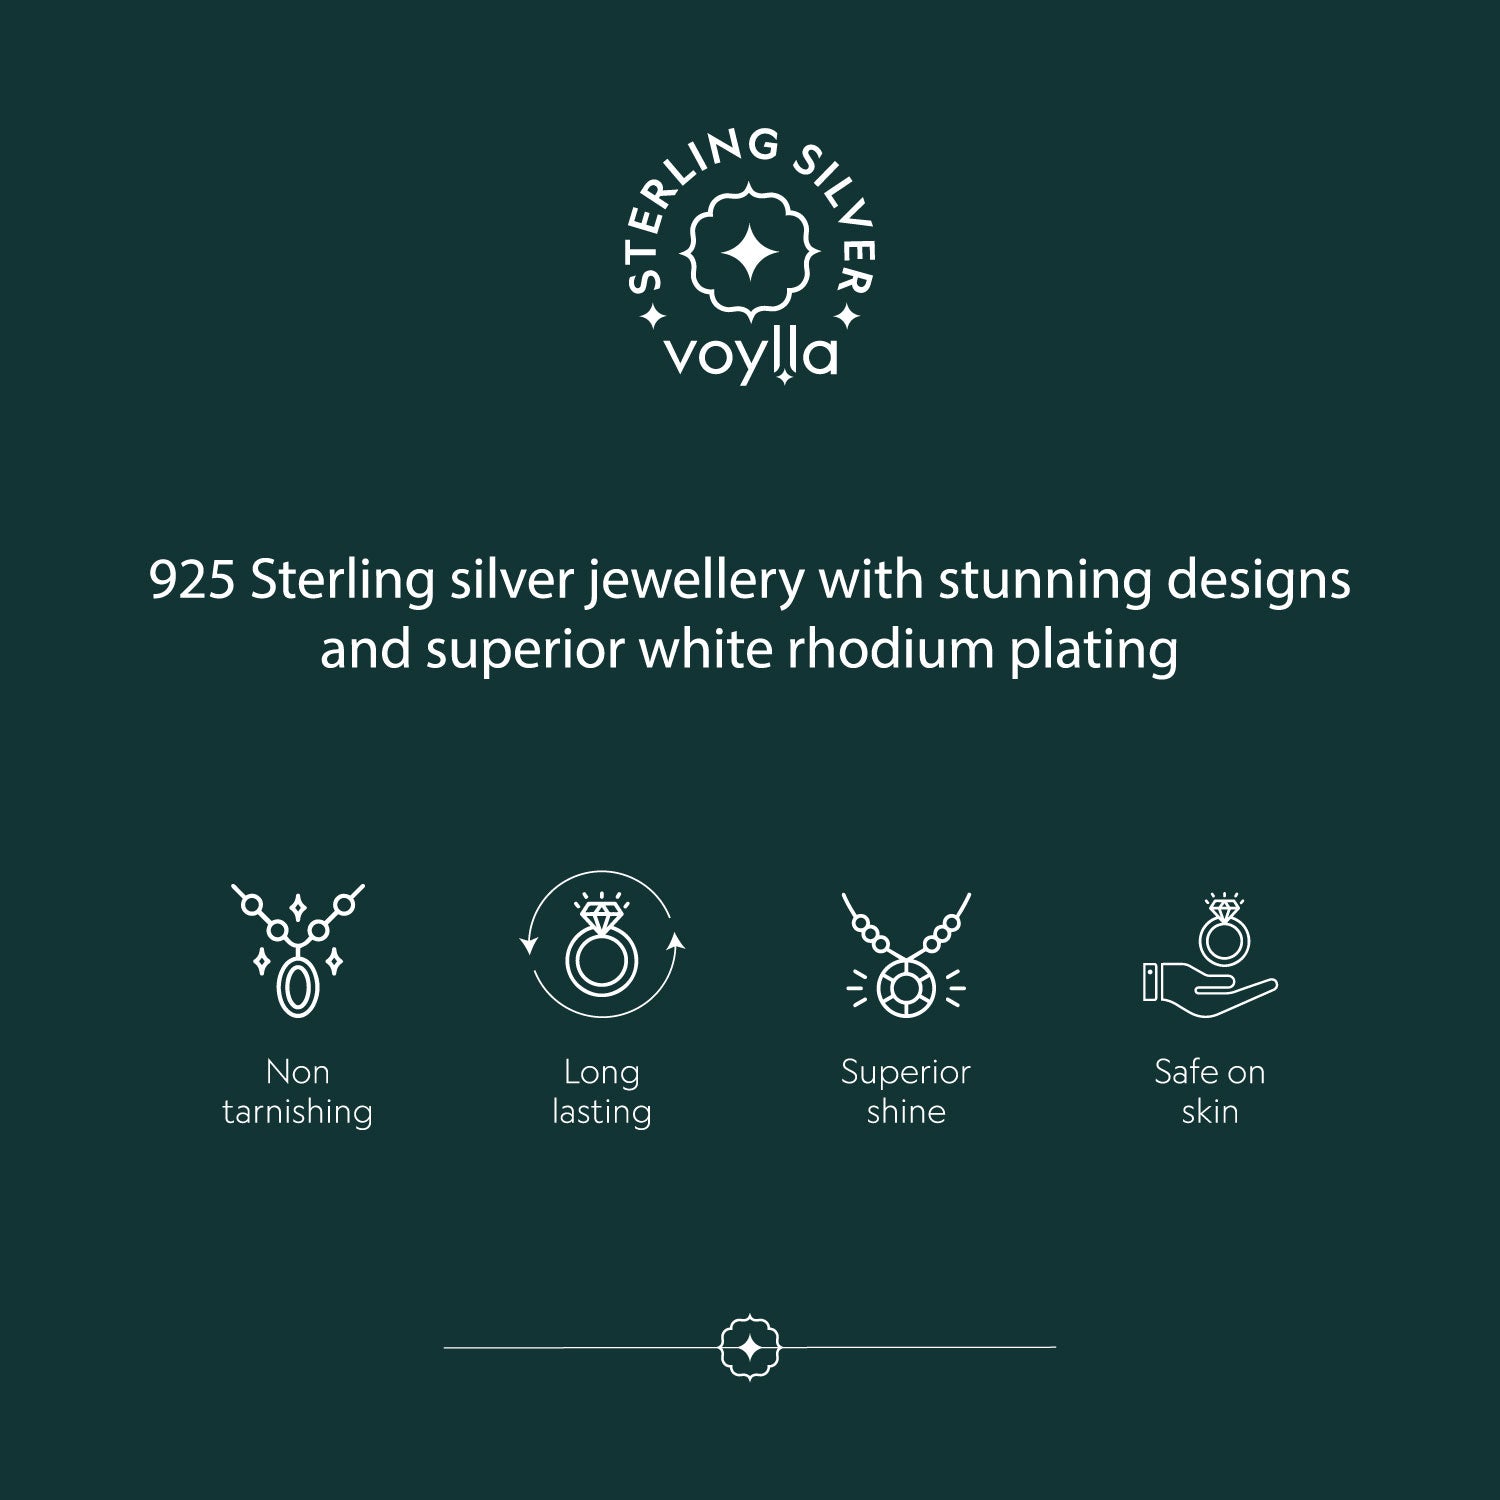 Sterling Silver Alphabet B Round Cut CZ Pendant